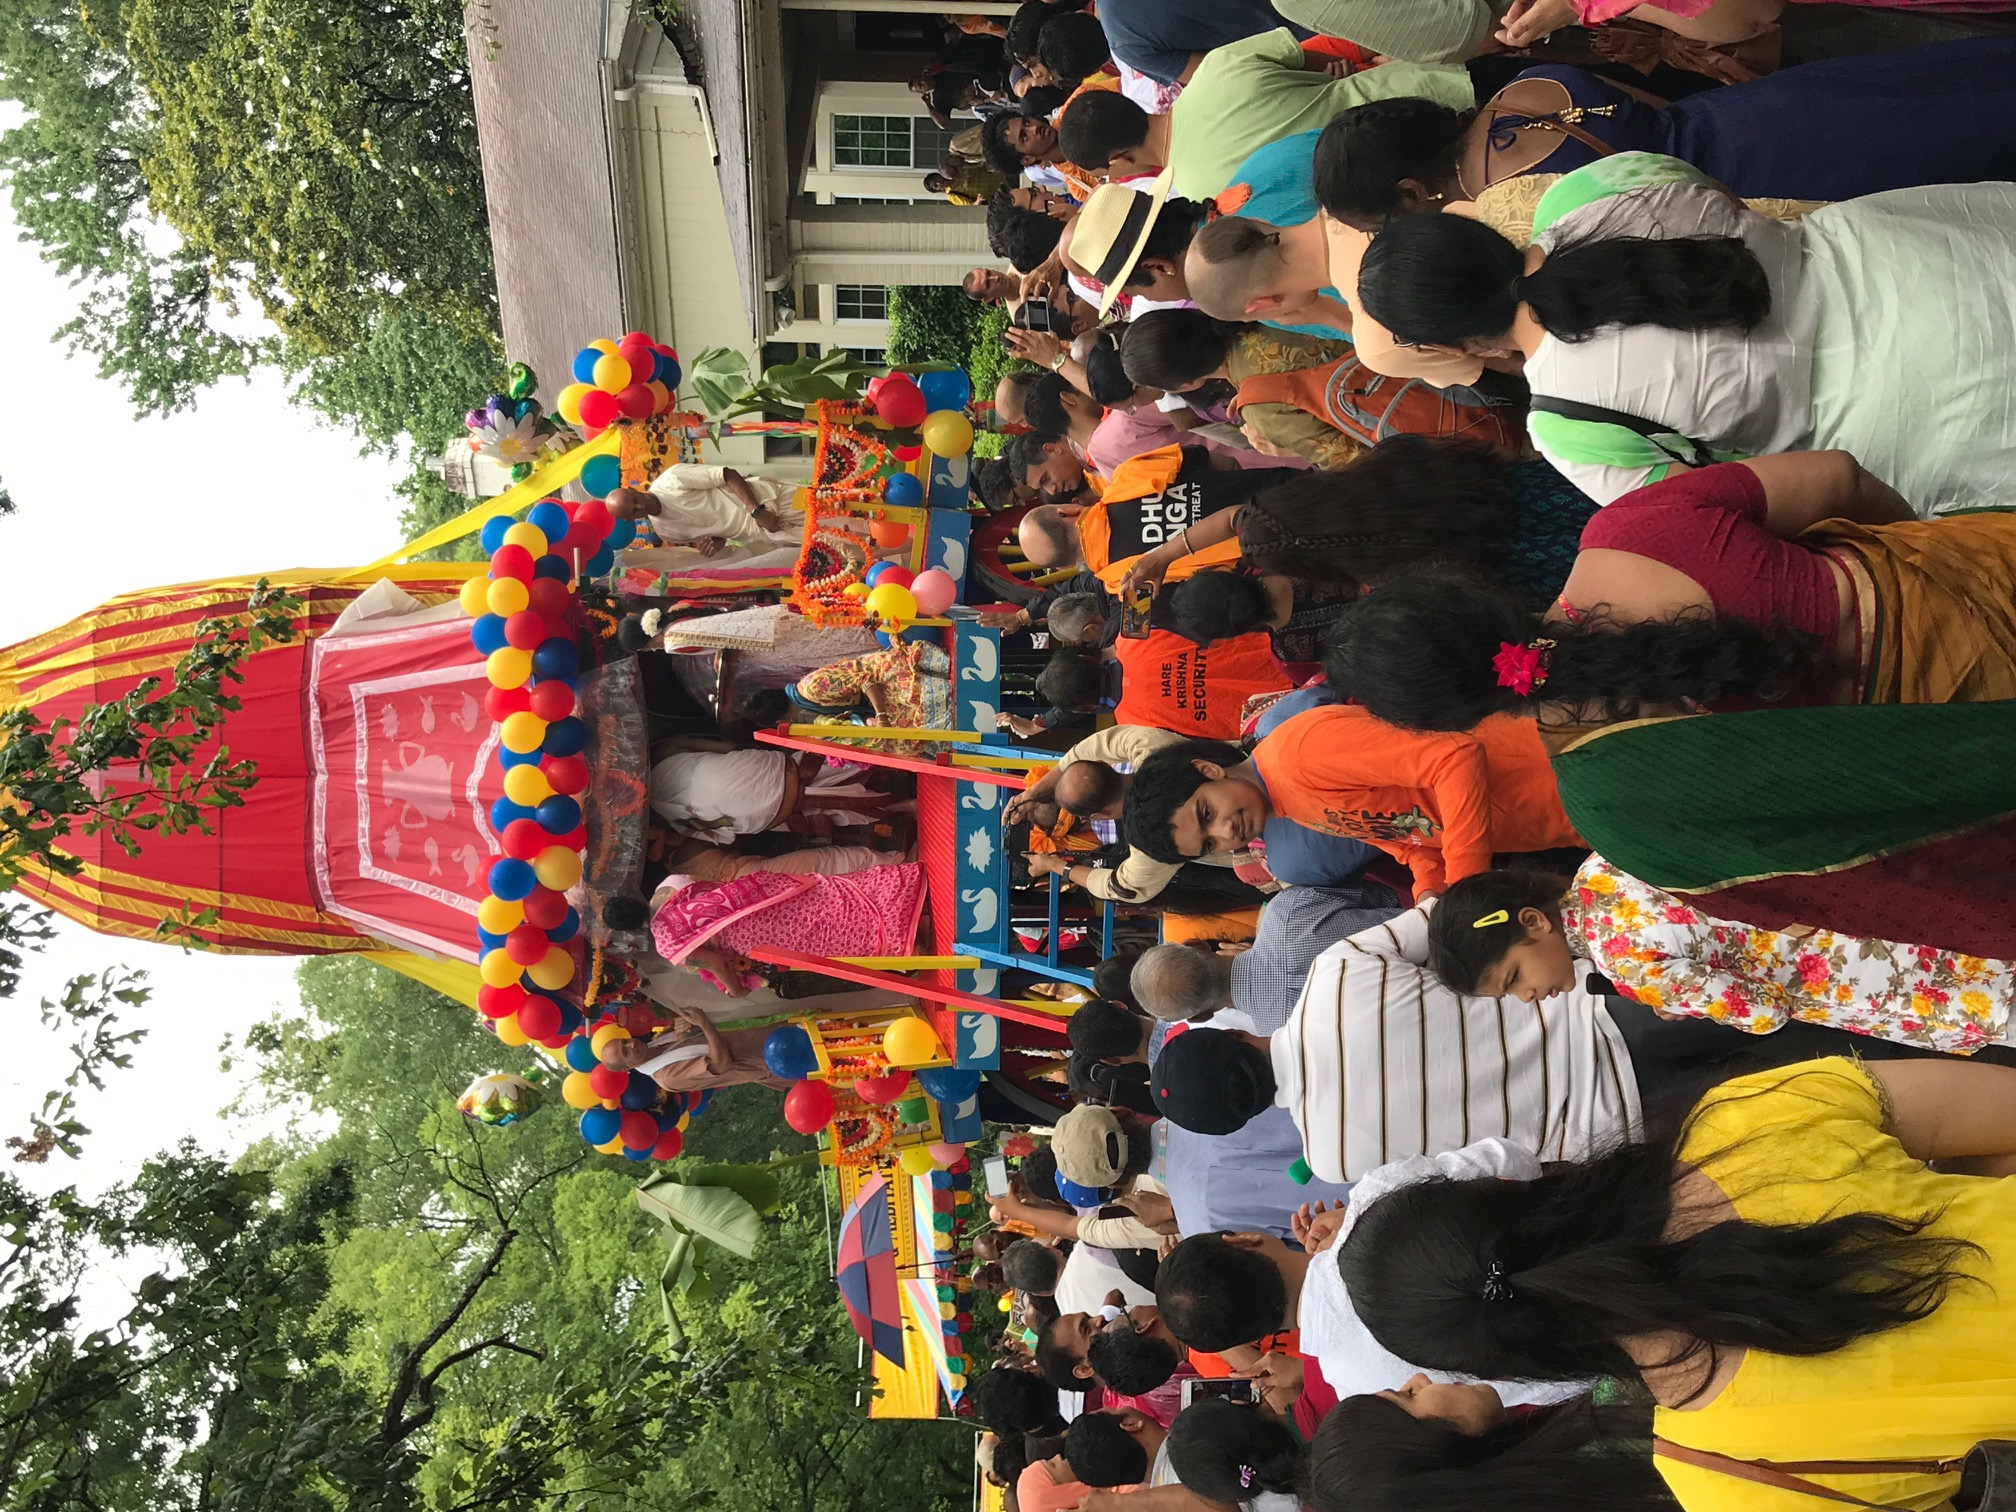 “Hare Krishna Festival of Chariots 2016 - 2019